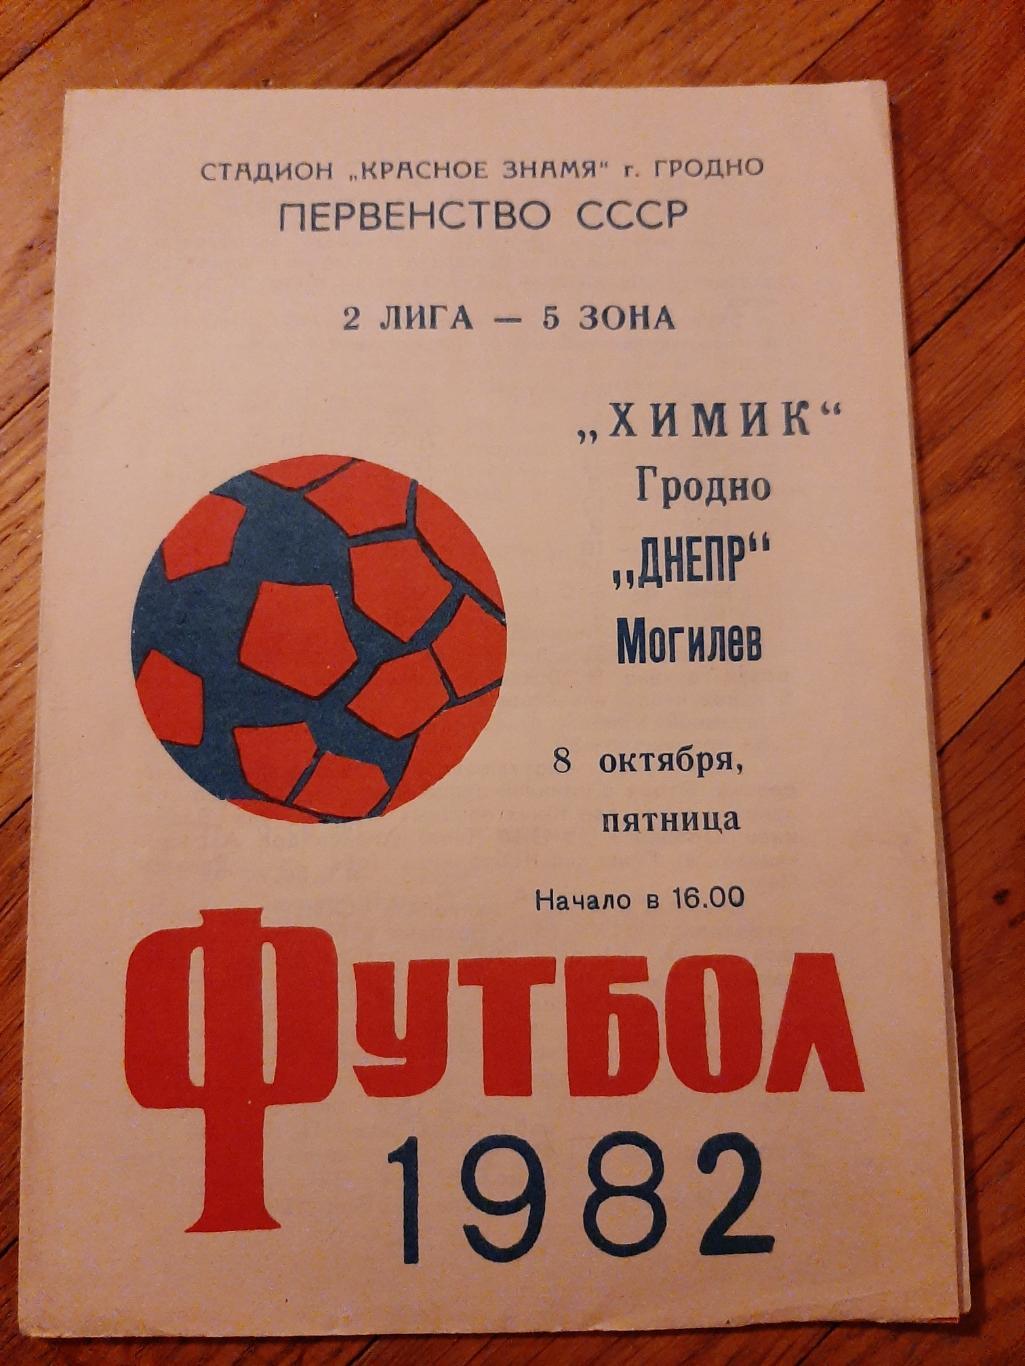 Химик (Гродно) - Днепр (Могилев) 1982